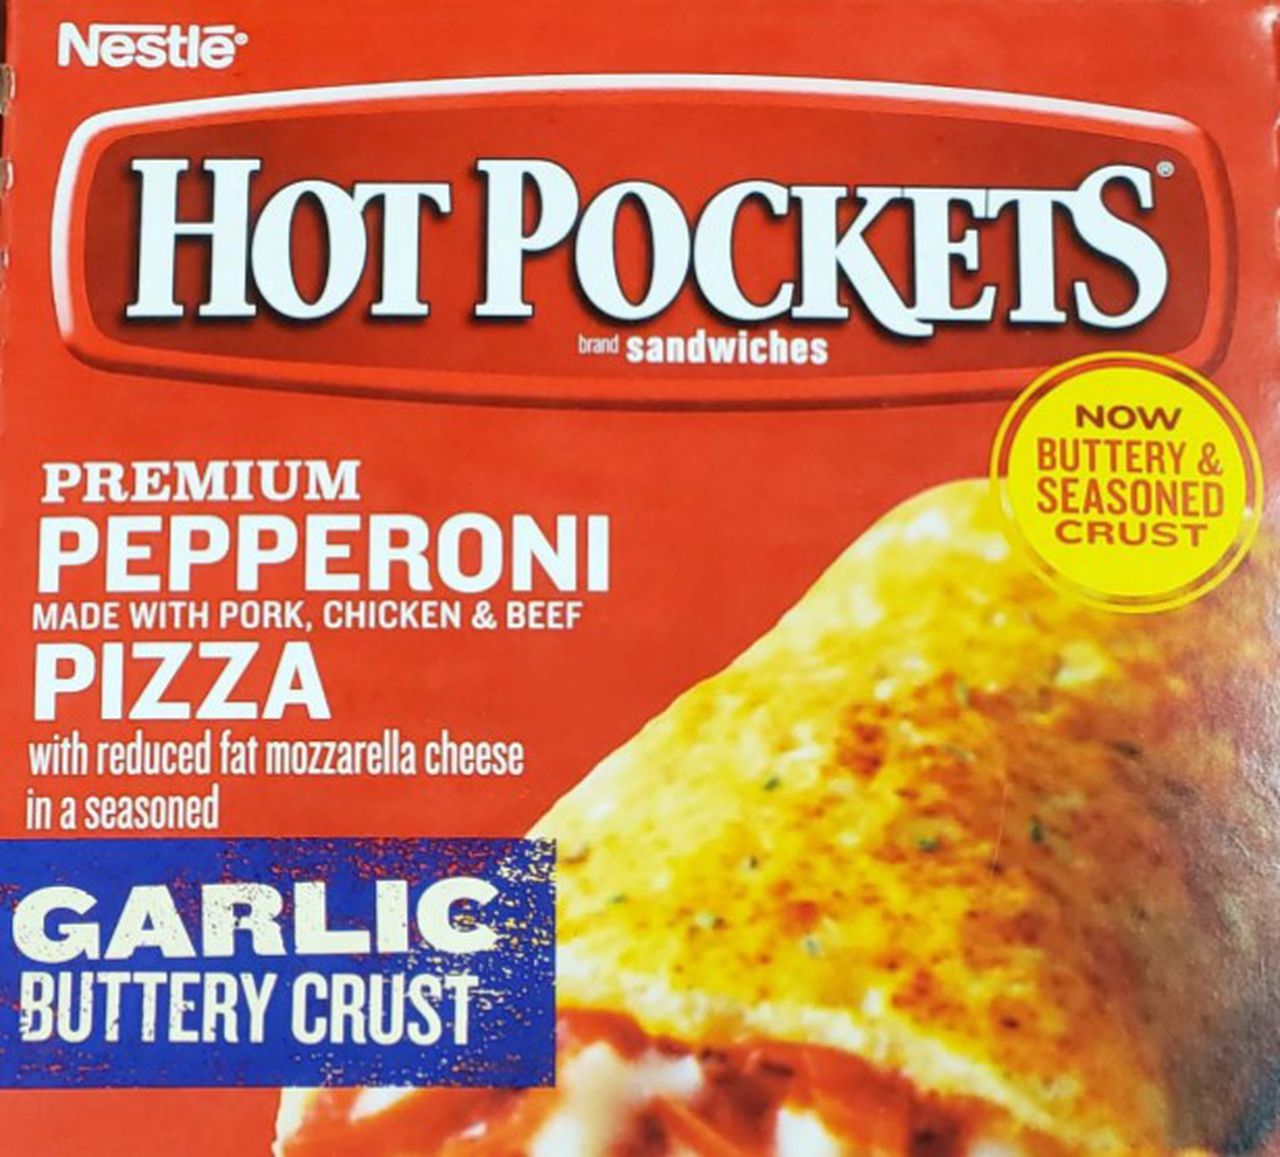 Recalled Hot Pockets